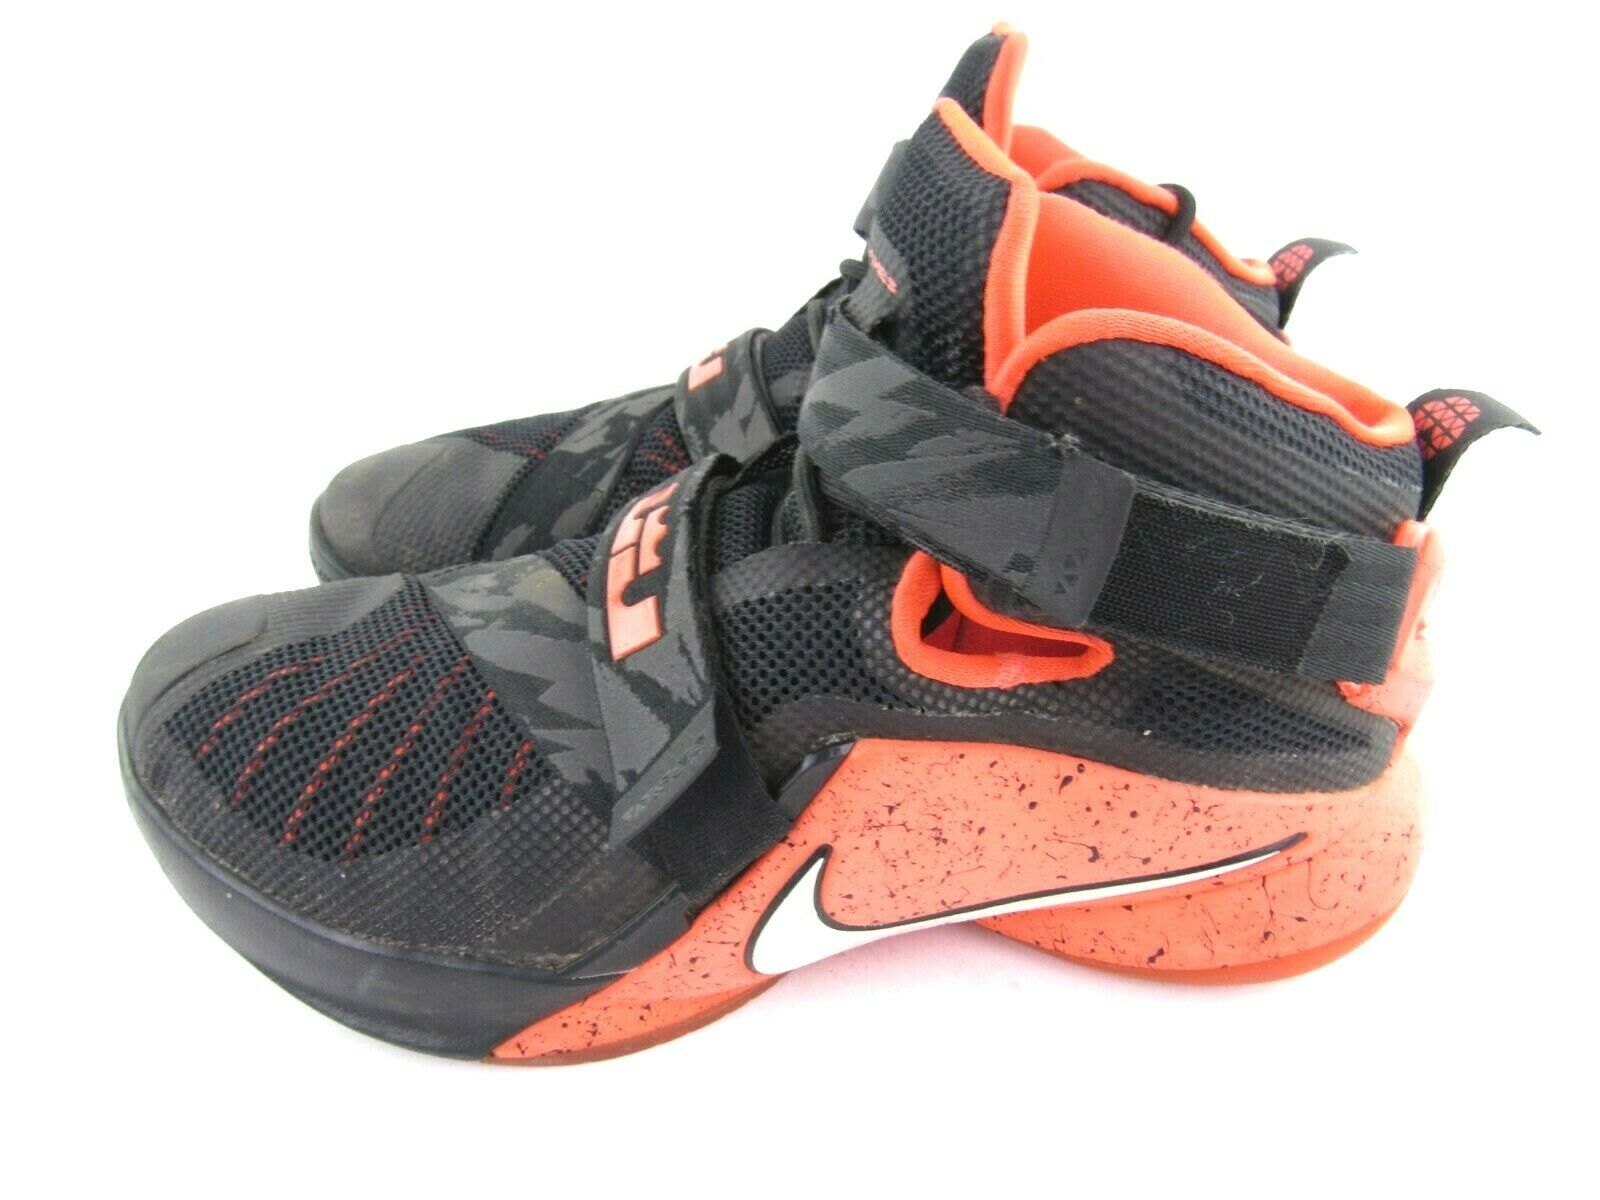 Lebron James Soldier Ix 9 Shoes Black Orange Size 8.5 Nike 749490-016 Swoosh